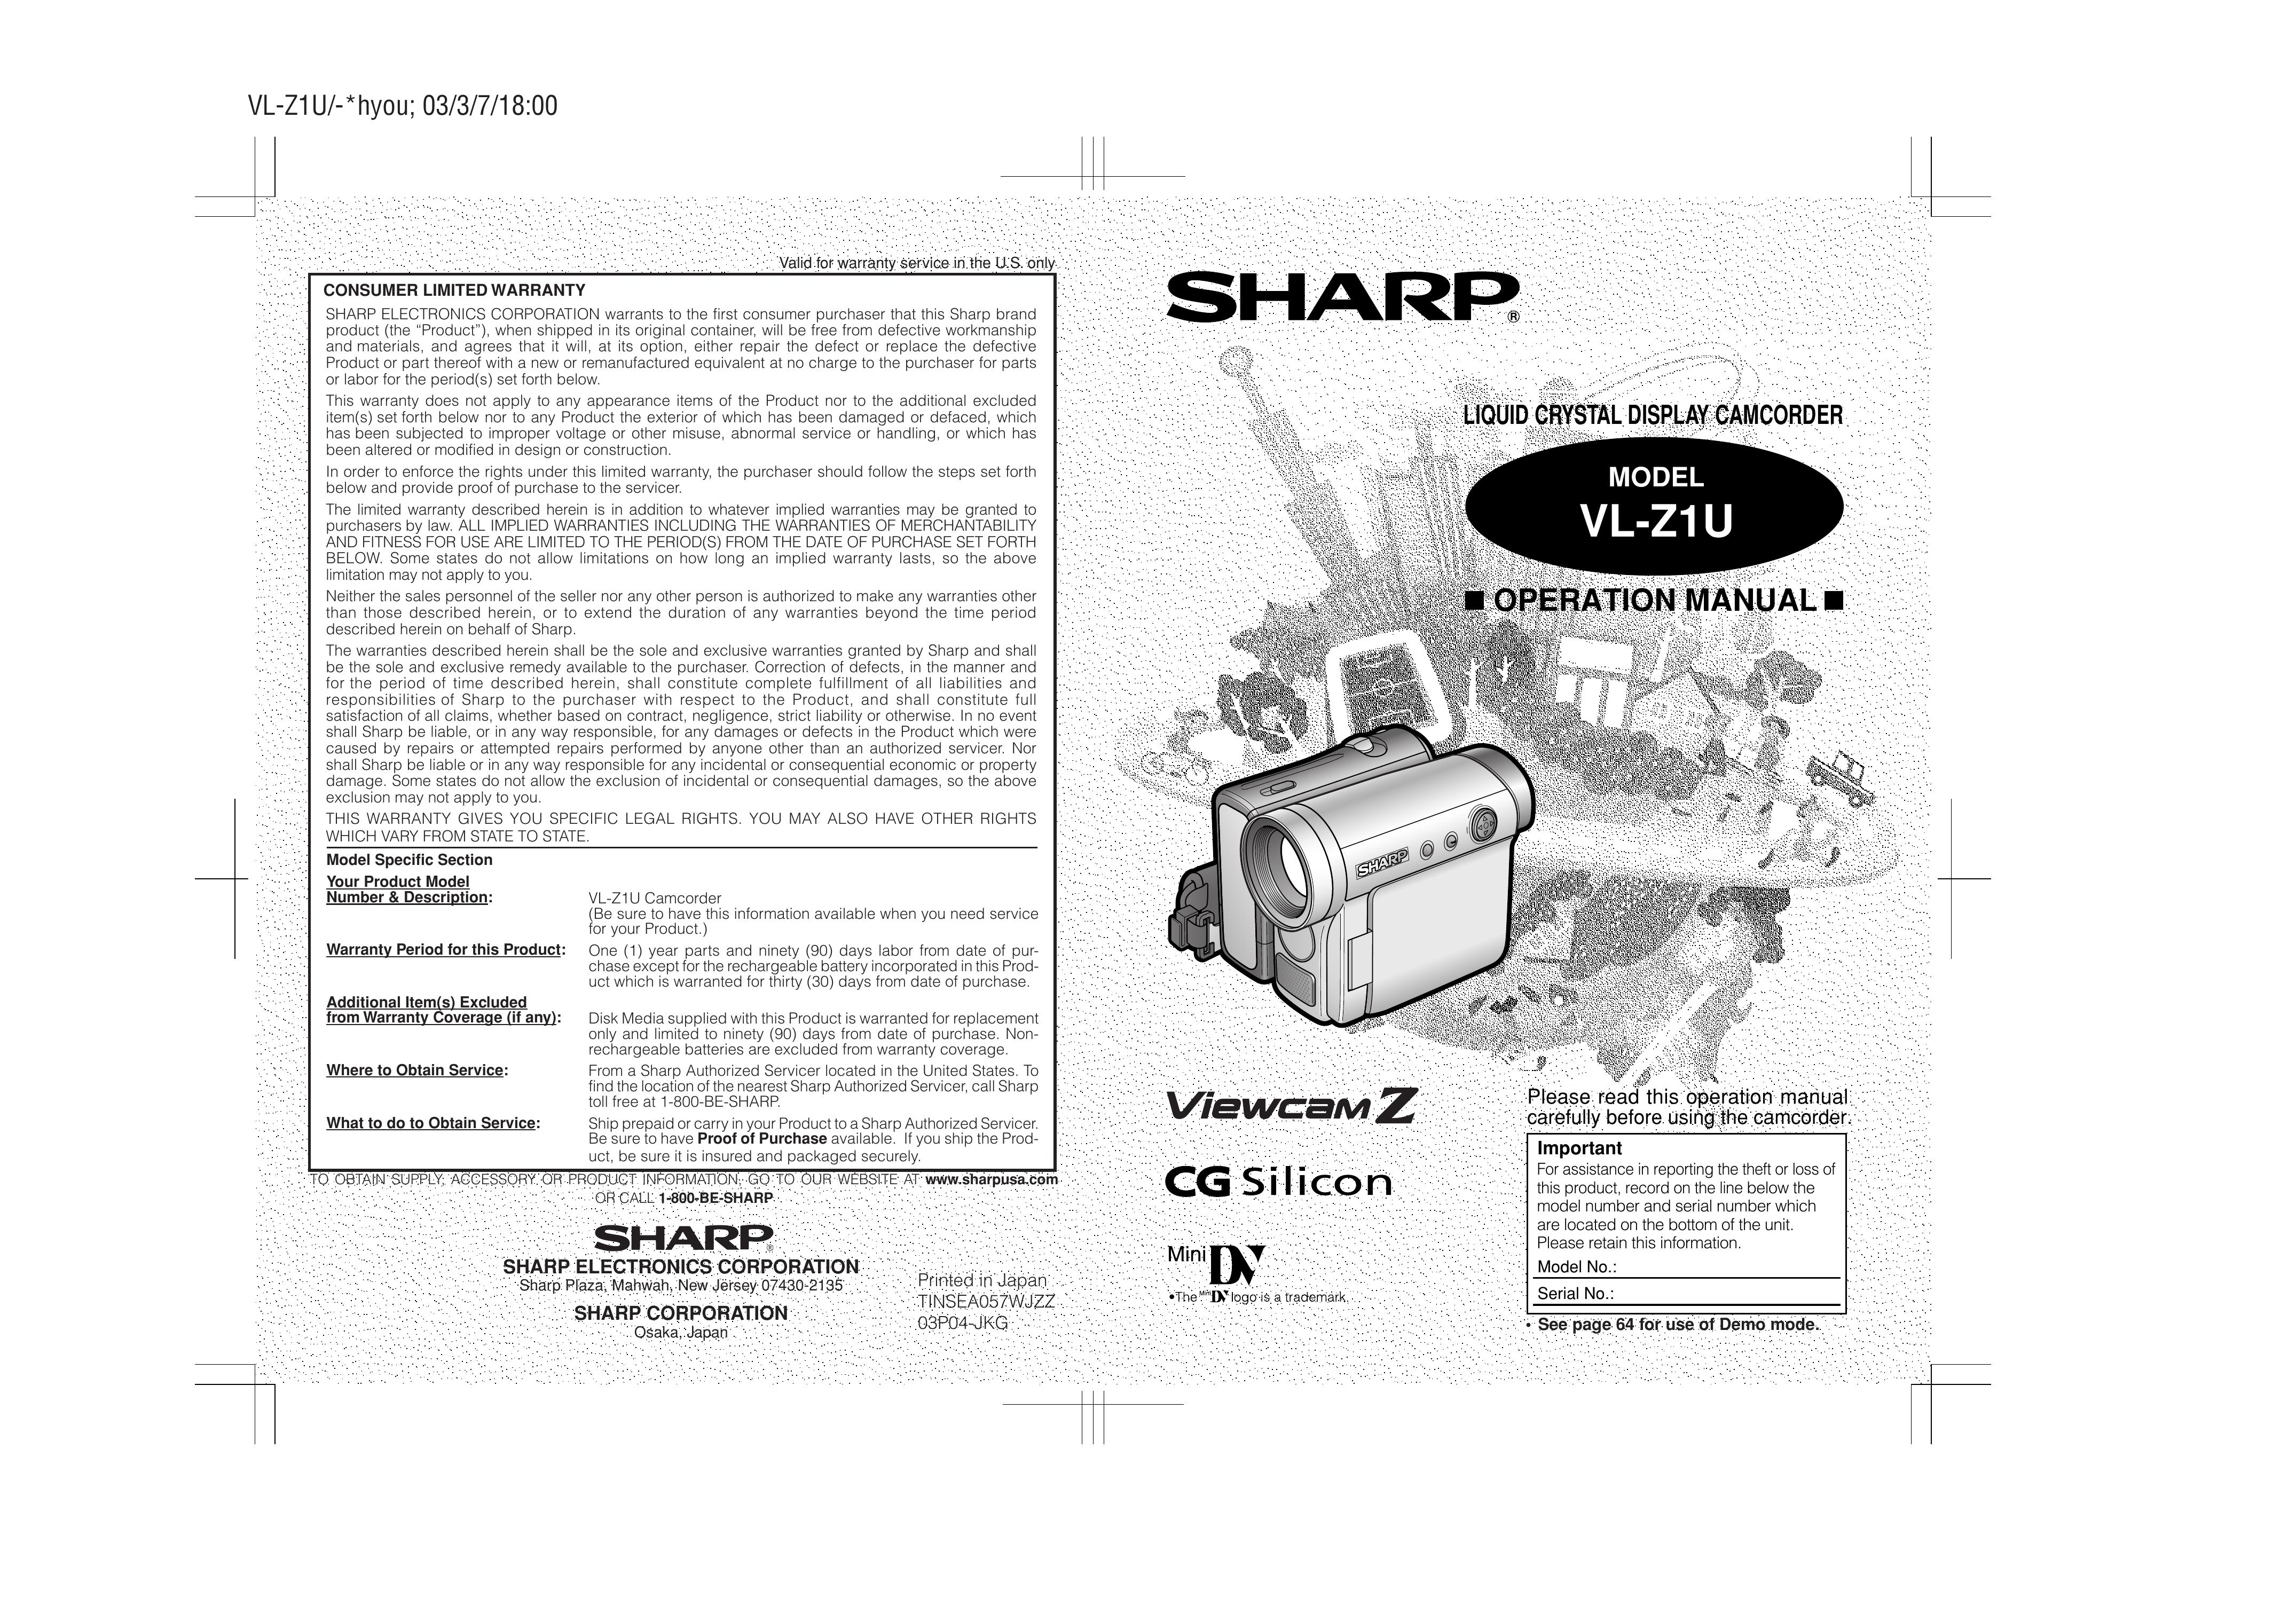 Sharp VL-Z1U Camcorder User Manual